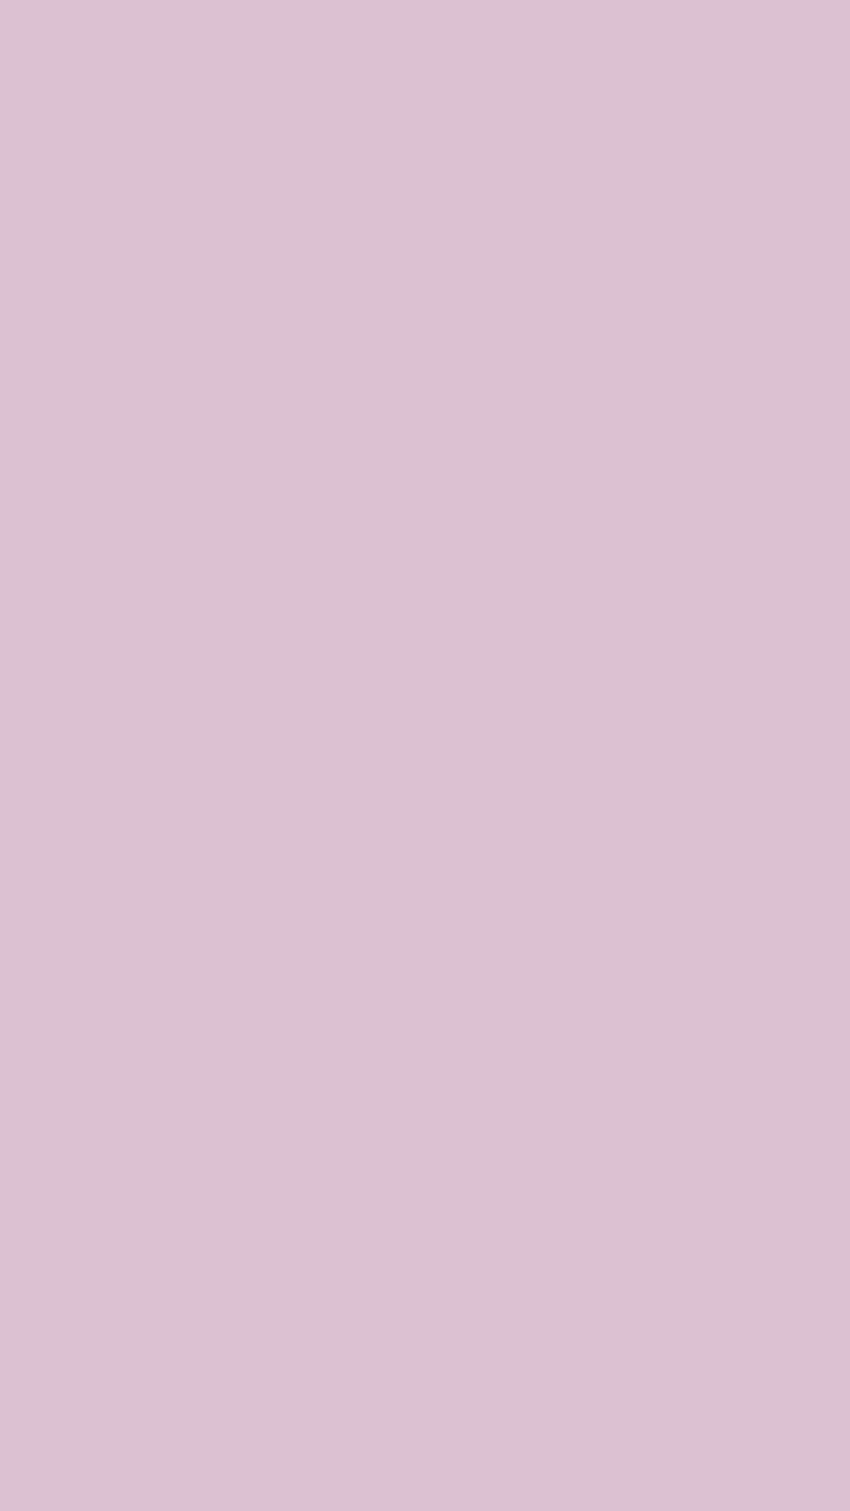 Pastel Pink Plain Background Vector Eps